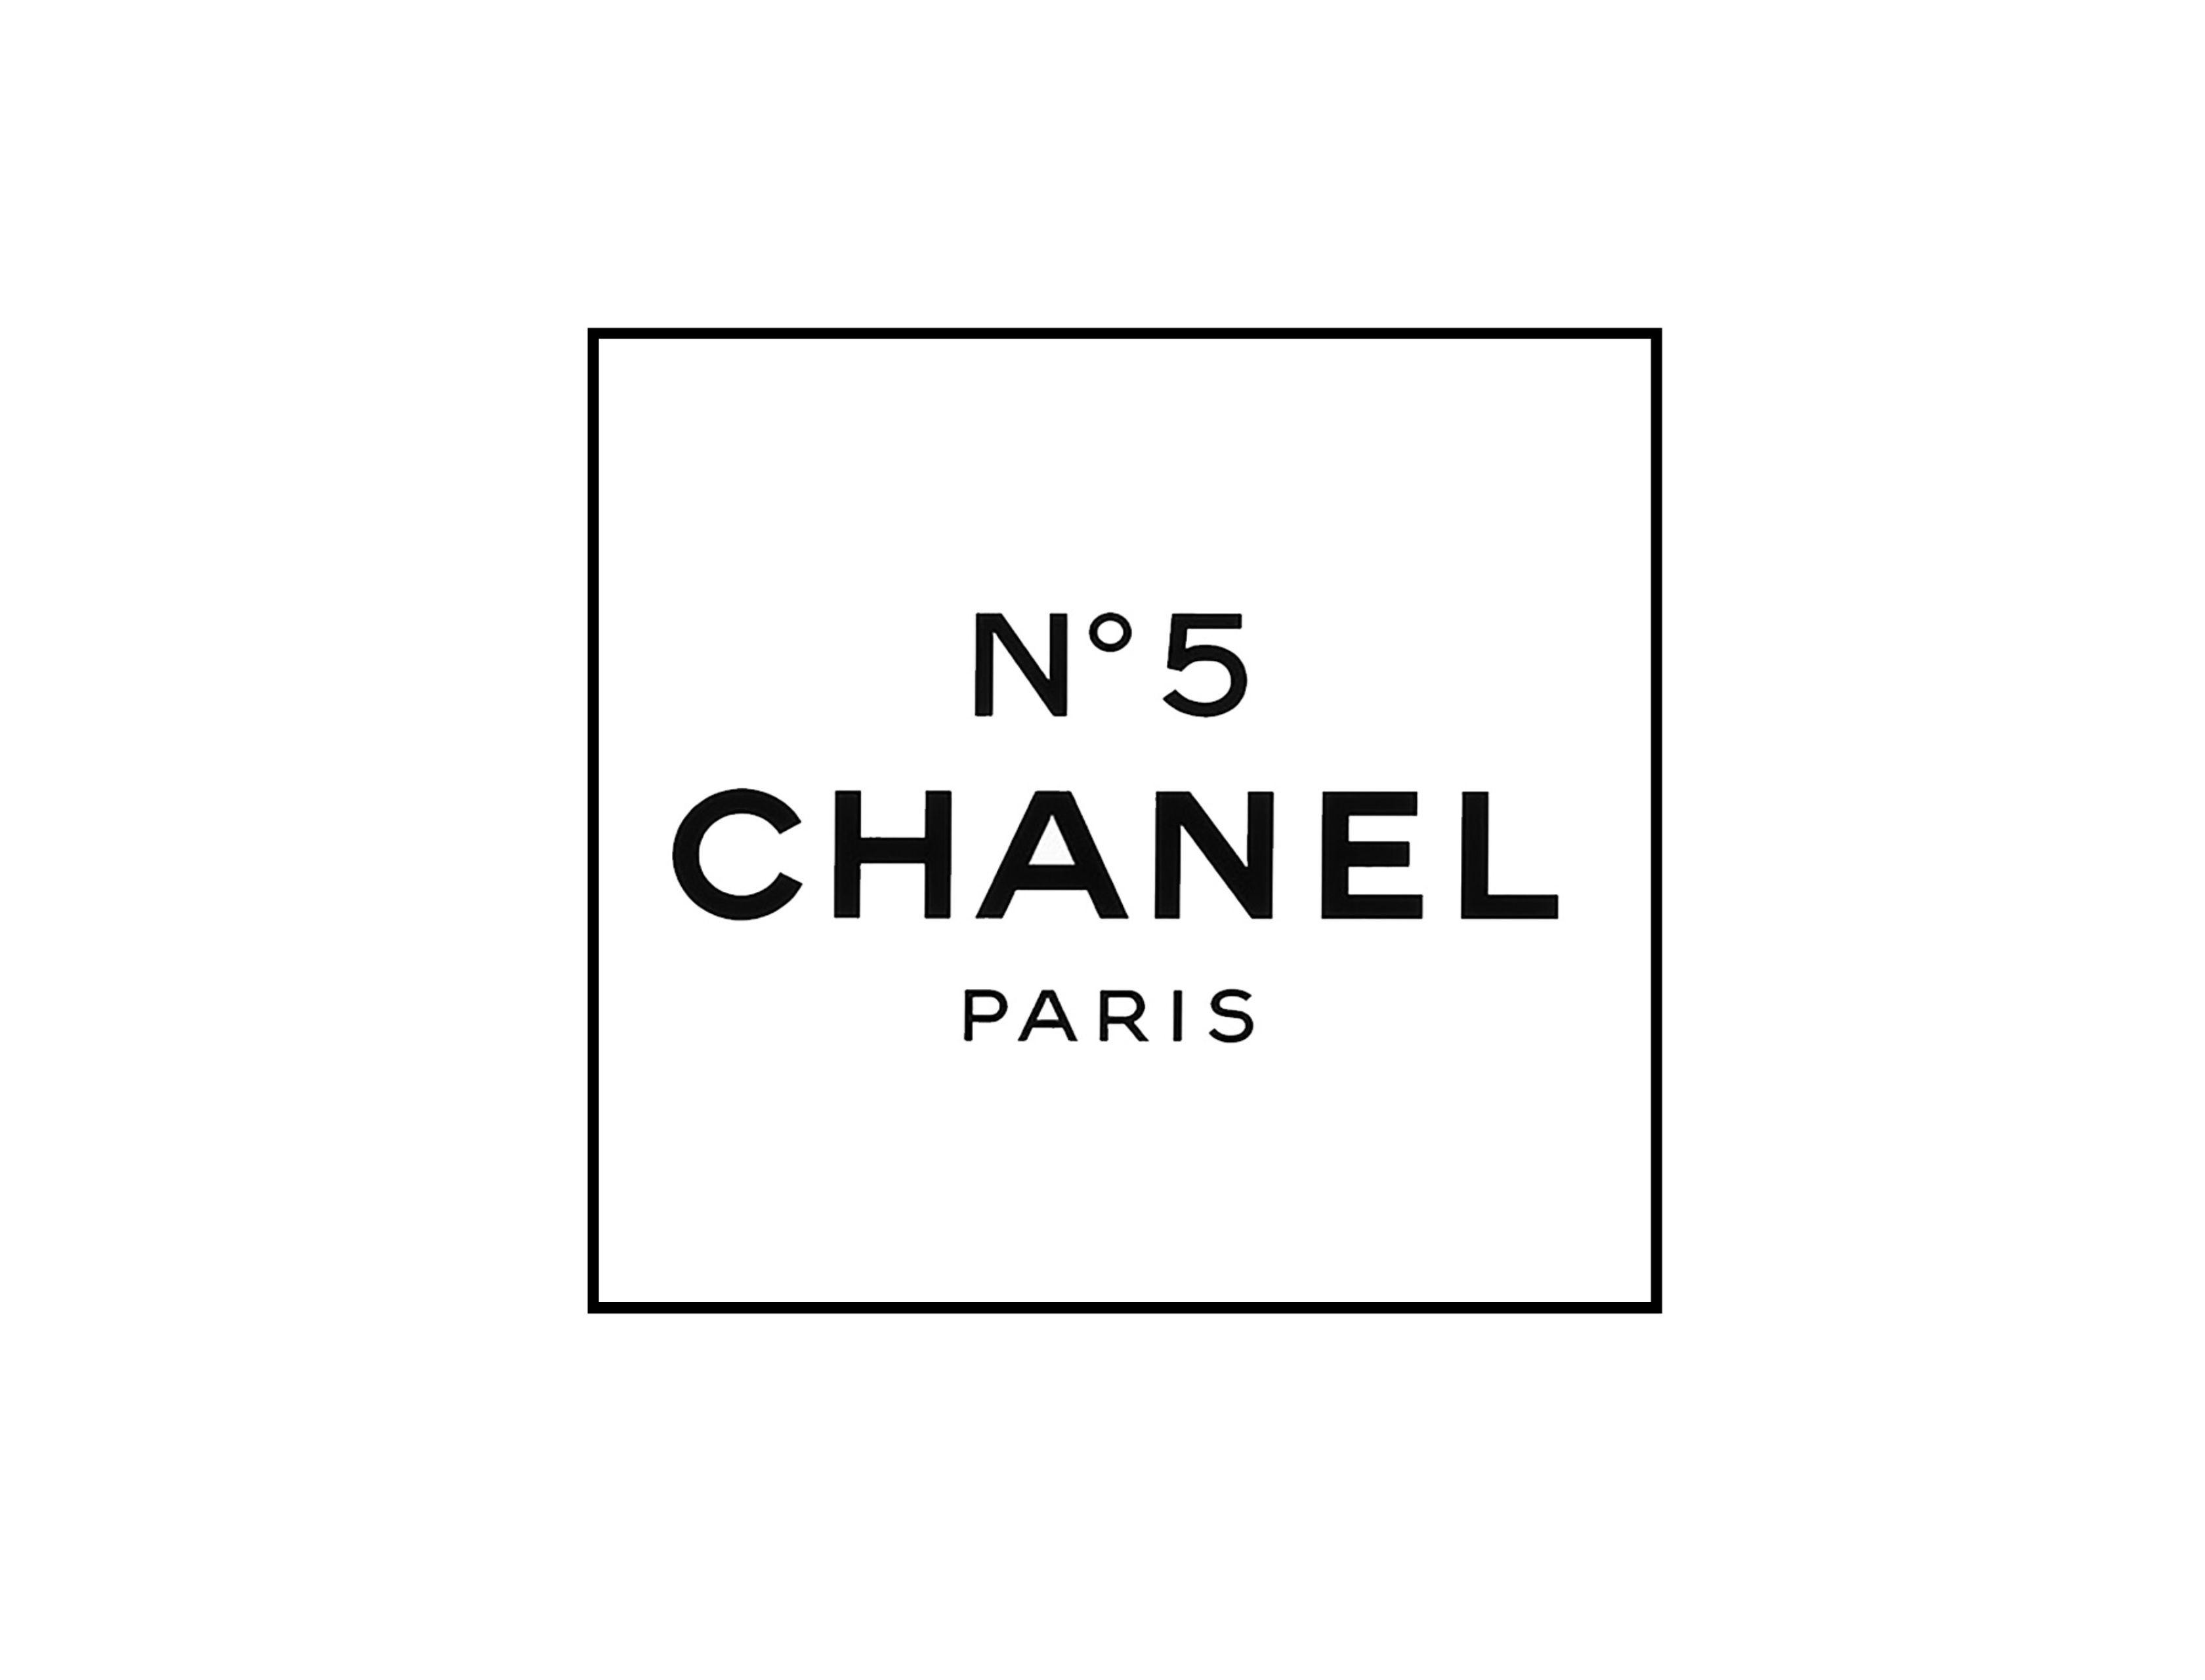 Chanel Number 5 Logo - Chanel No 5 label